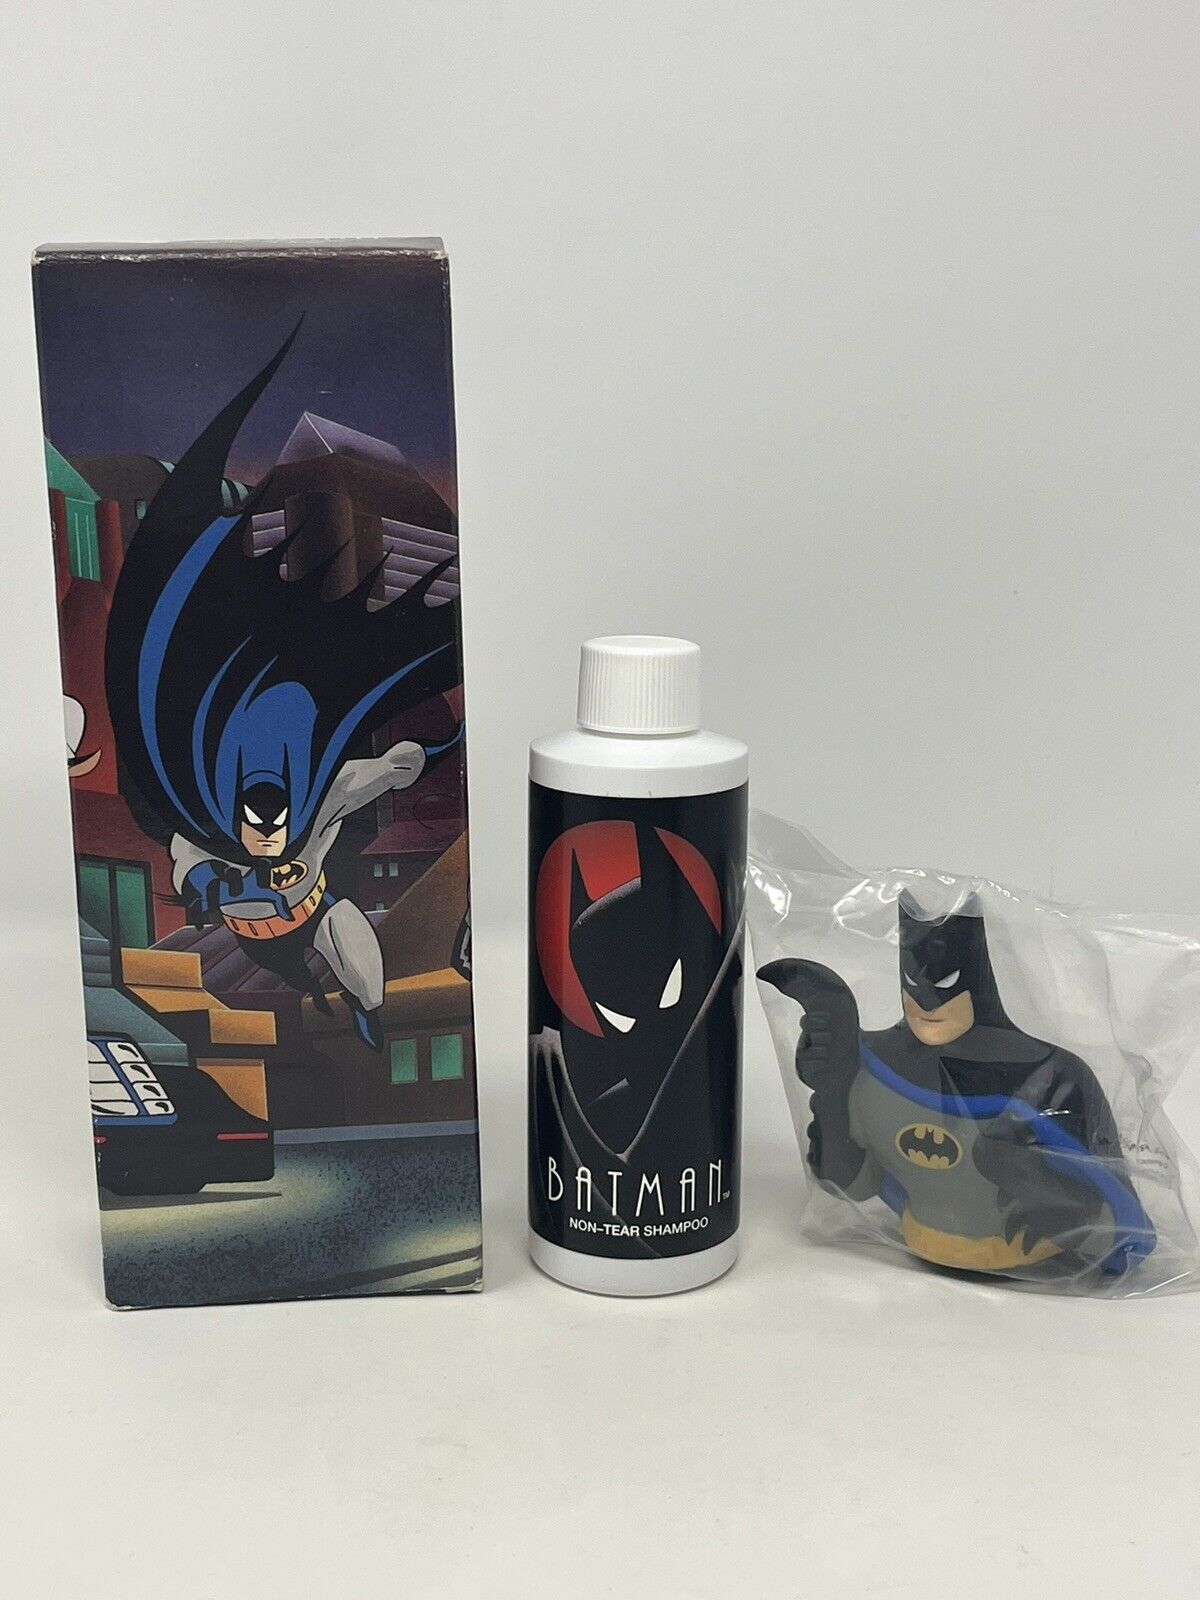 New Vintage 1993 Avon Batman Non Tear Shampoo 4 Fl Oz with Finger Puppet Cap